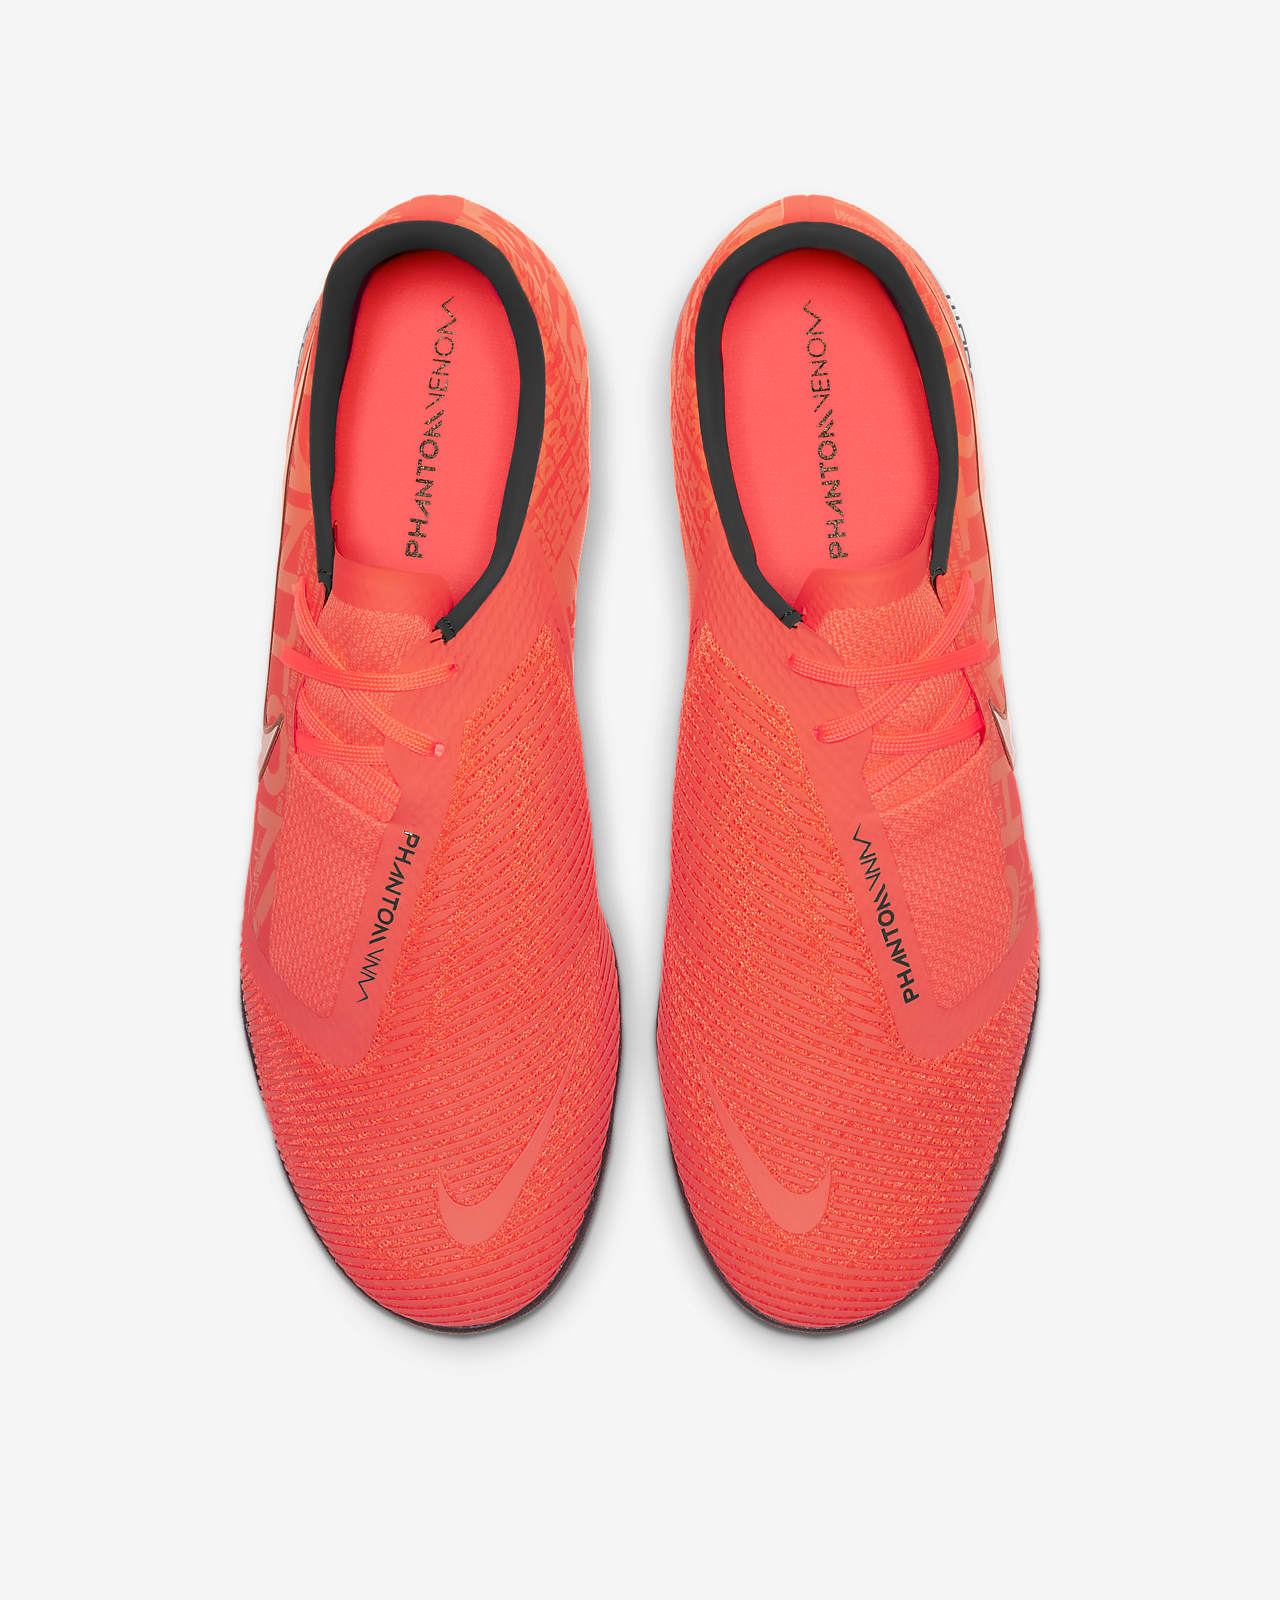 nike artificial turf soccer shoes